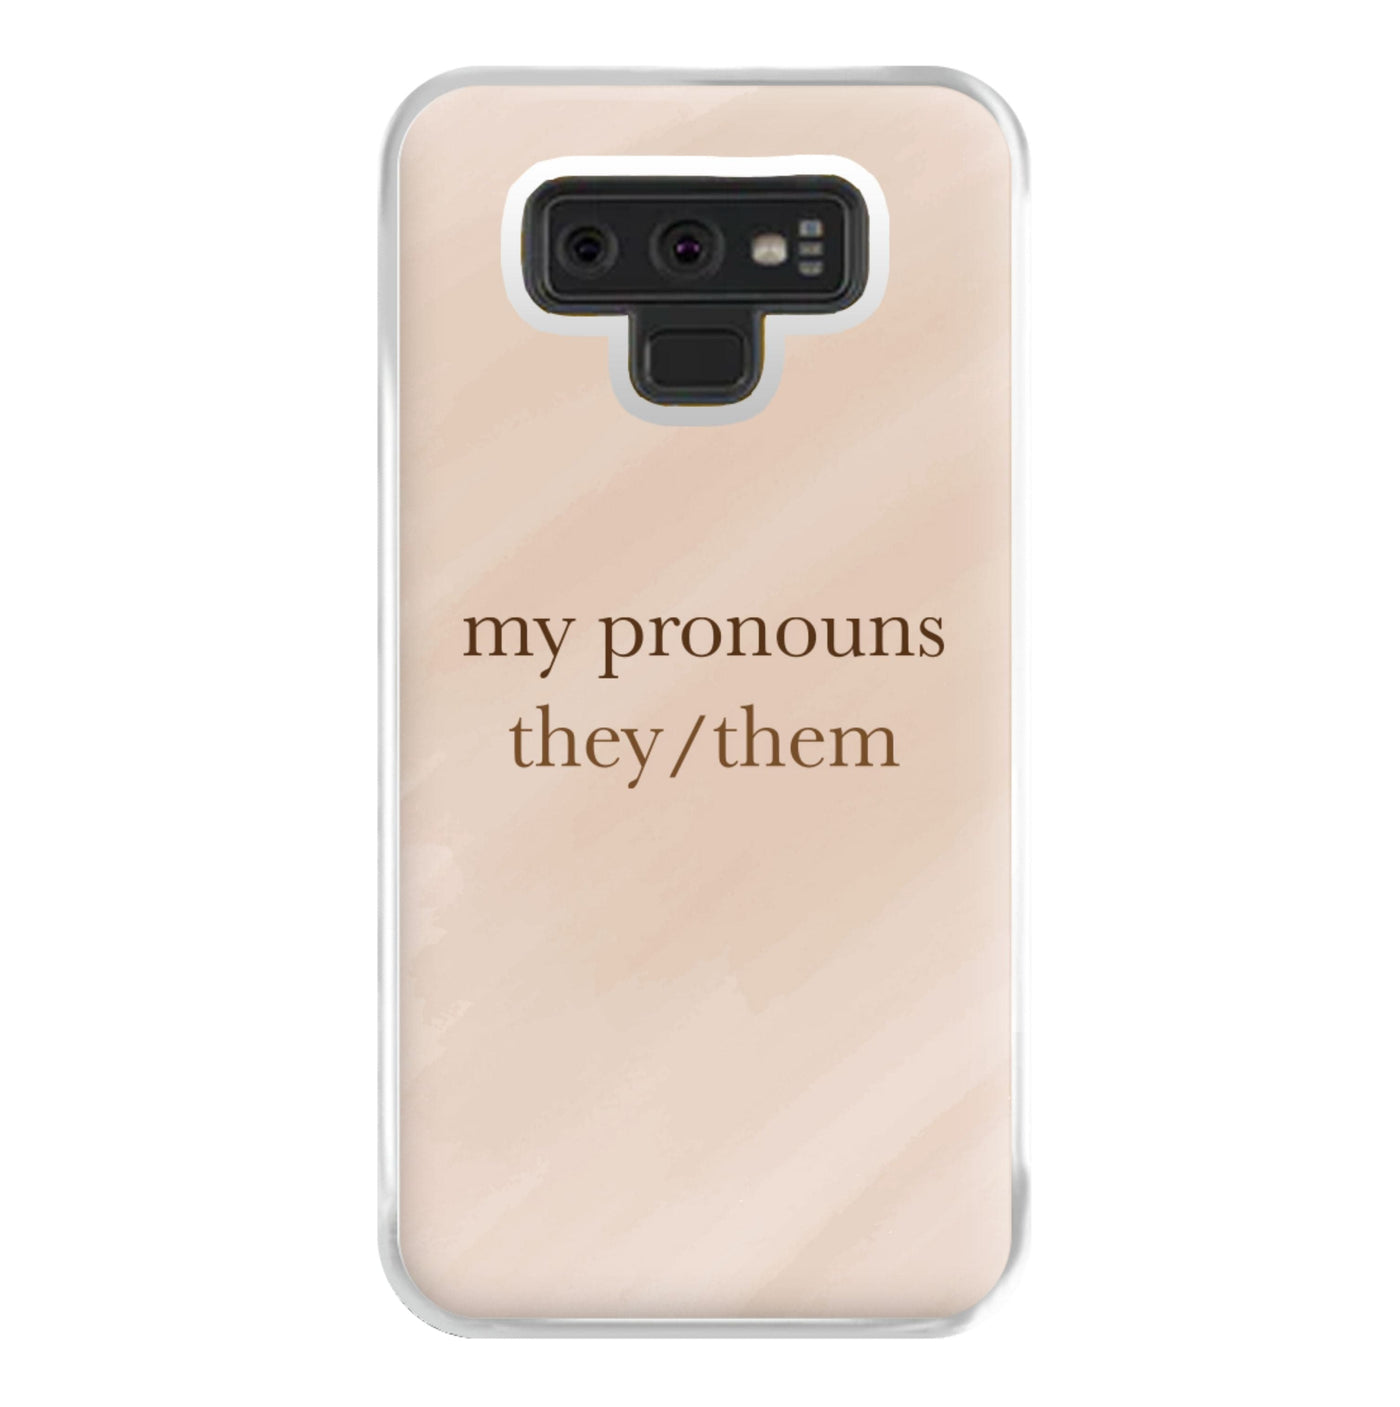 They & Them - Pronouns Phone Case